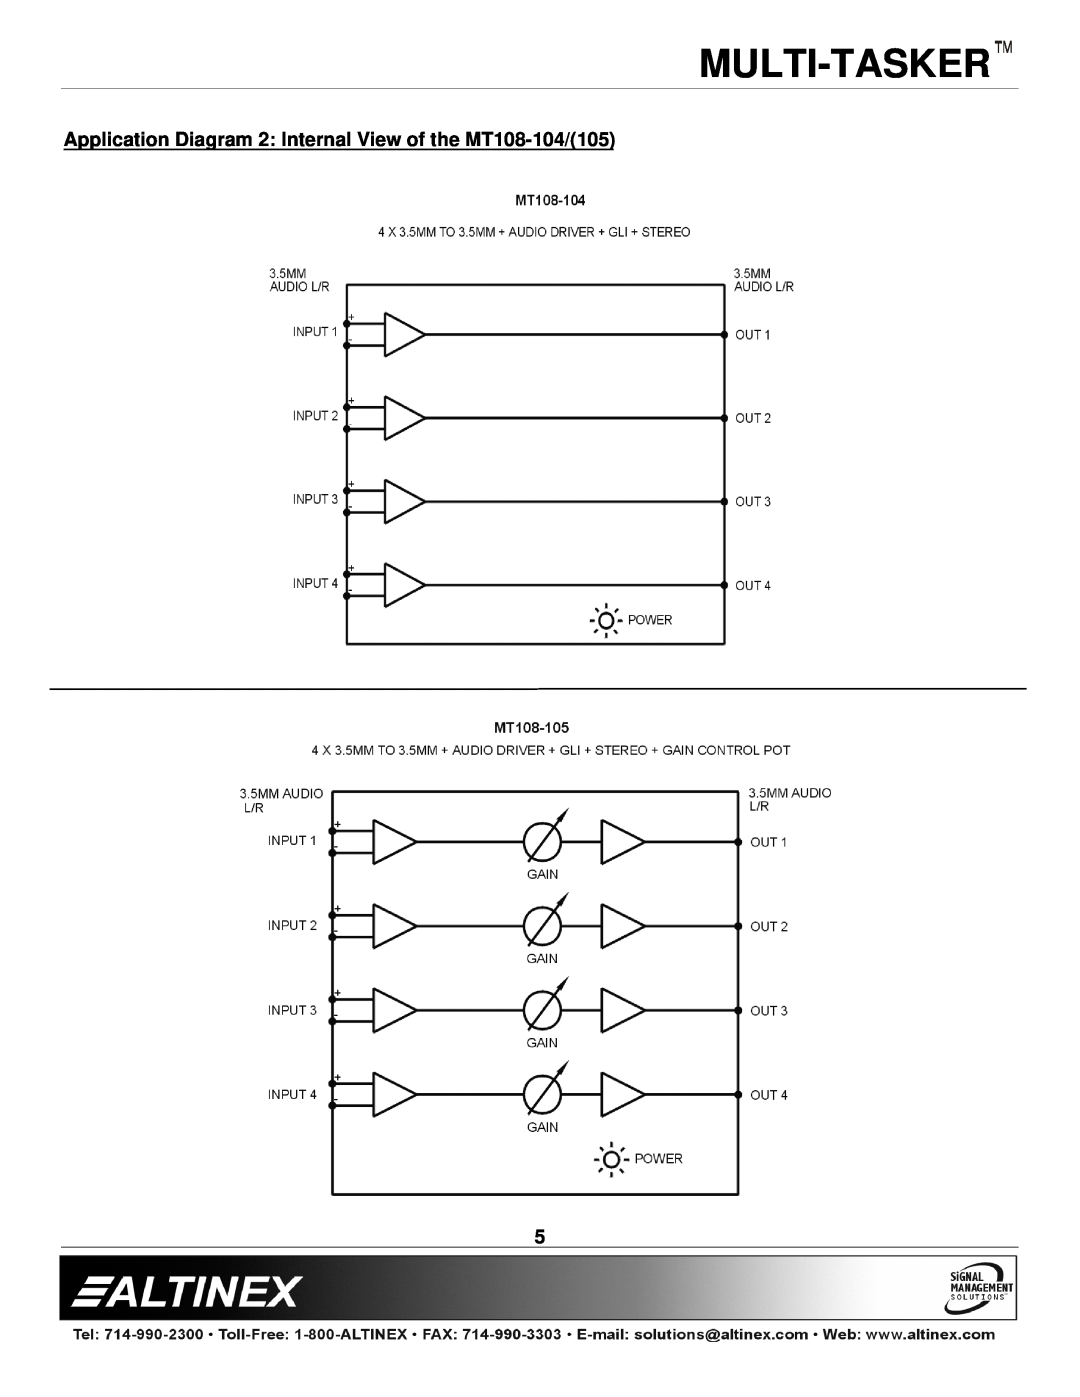 Altinex MT108-105 manual Application Diagram 2 Internal View of the MT108-104/105, Multi-Tasker 